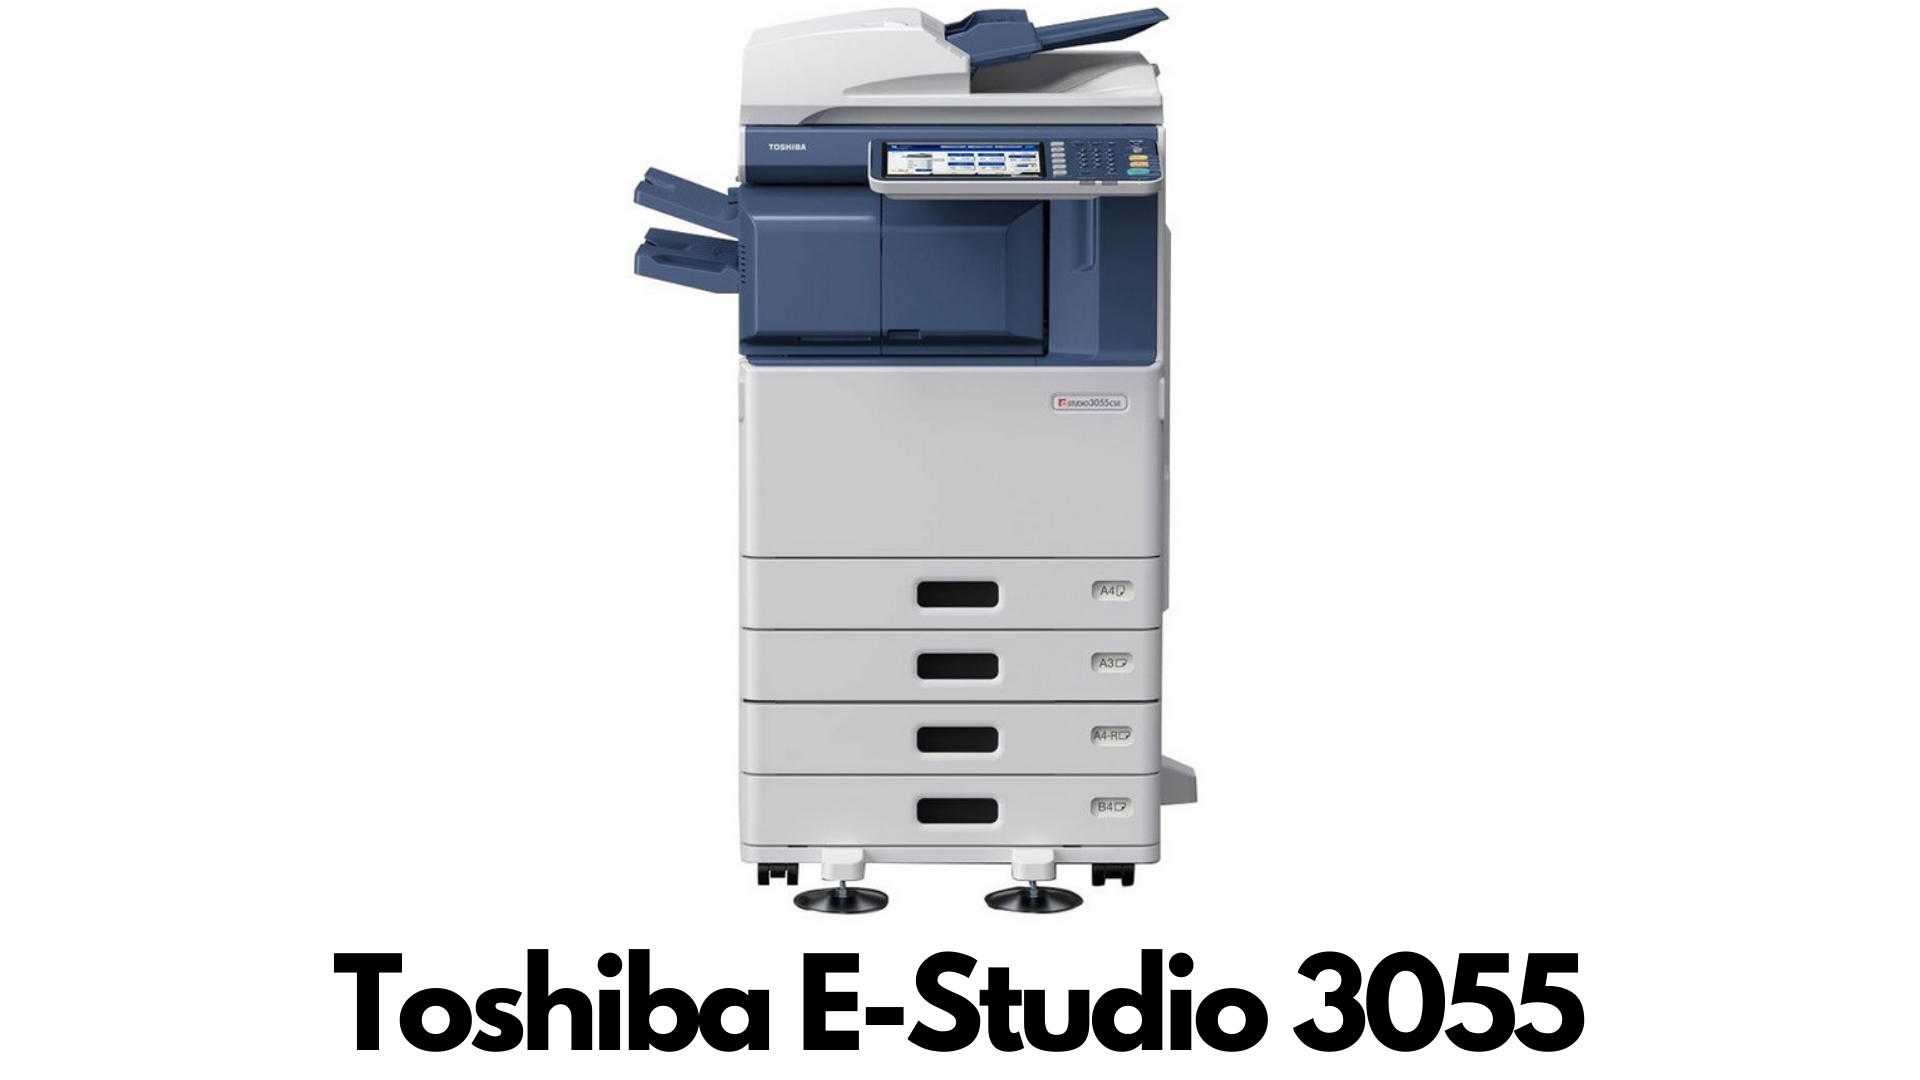 Toshiba e-Studio 3055